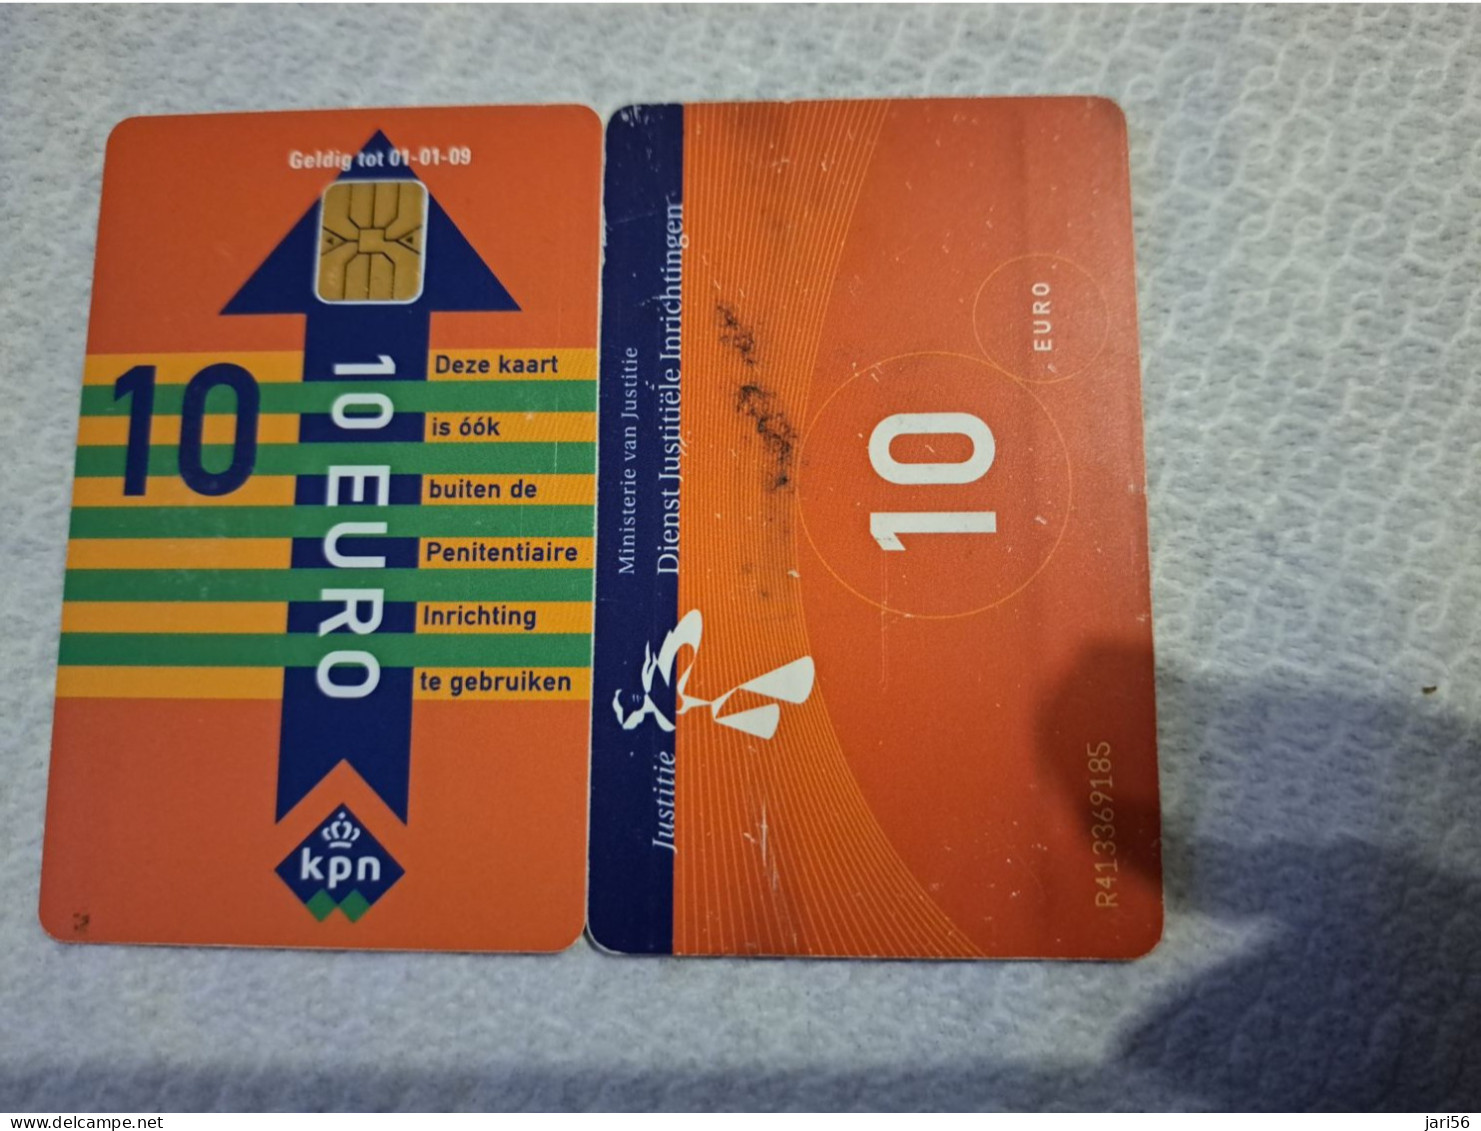 NETHERLANDS   € 10,-   / USED  / DATE  01-01-09  JUSTITIE/PRISON CARD  CHIP CARD/ USED   ** 16162** - Cartes GSM, Prépayées Et Recharges